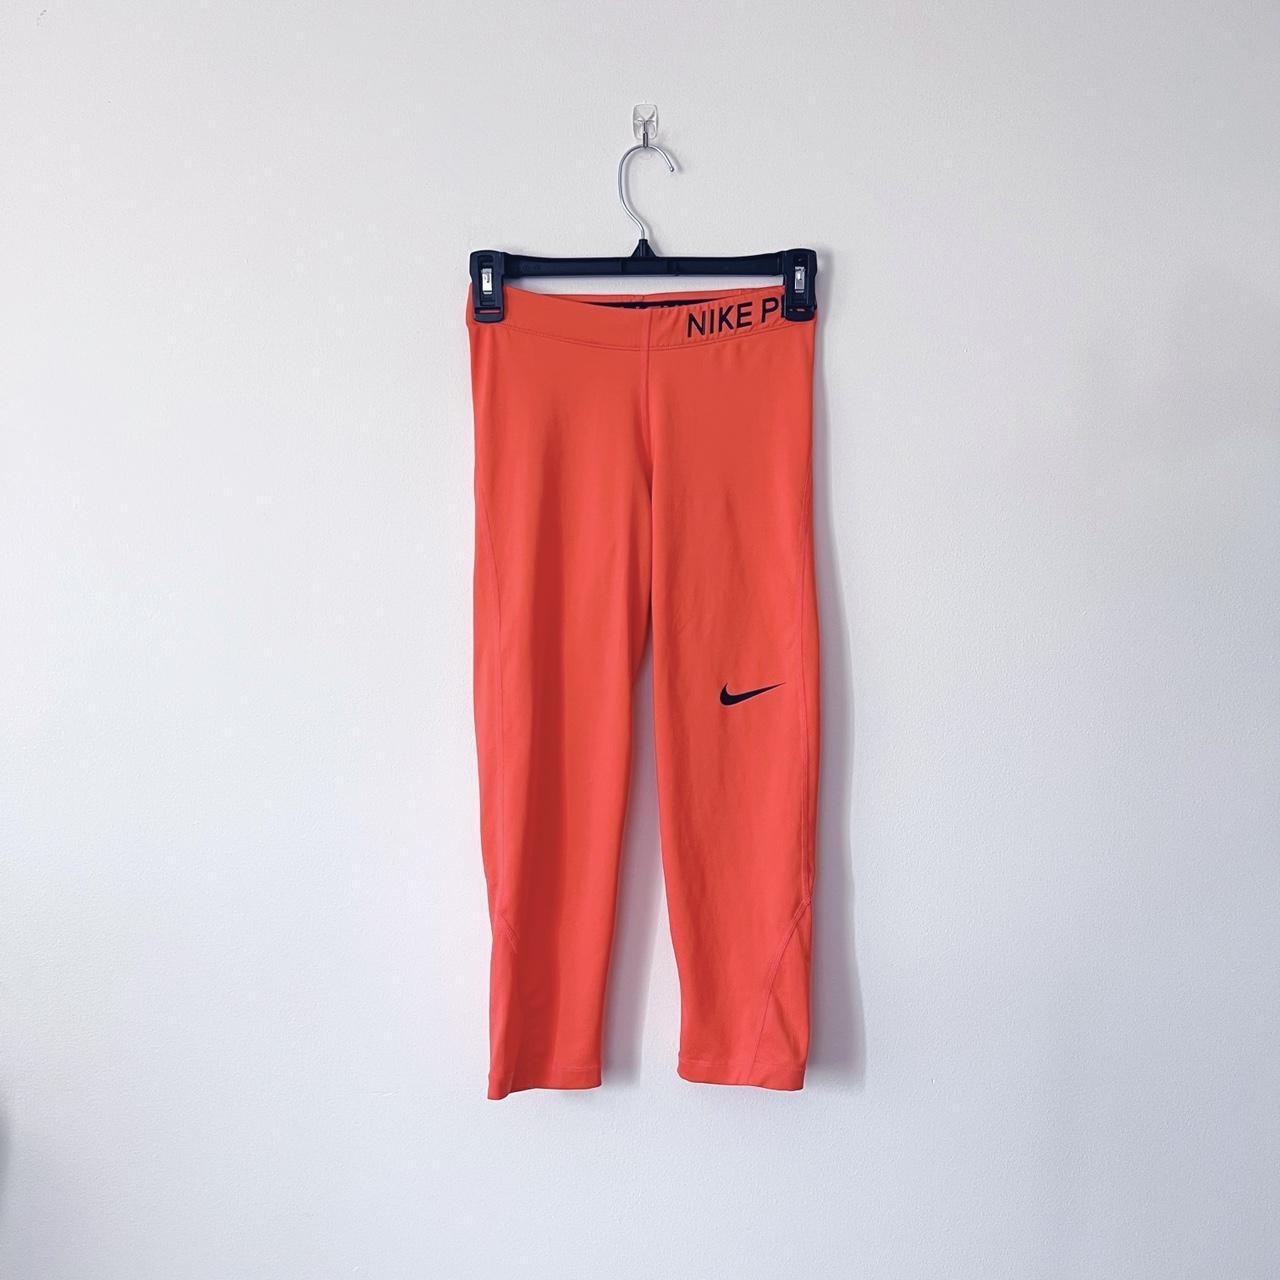 Nike Pro dri-fit coral capri leggings Hard to - Depop